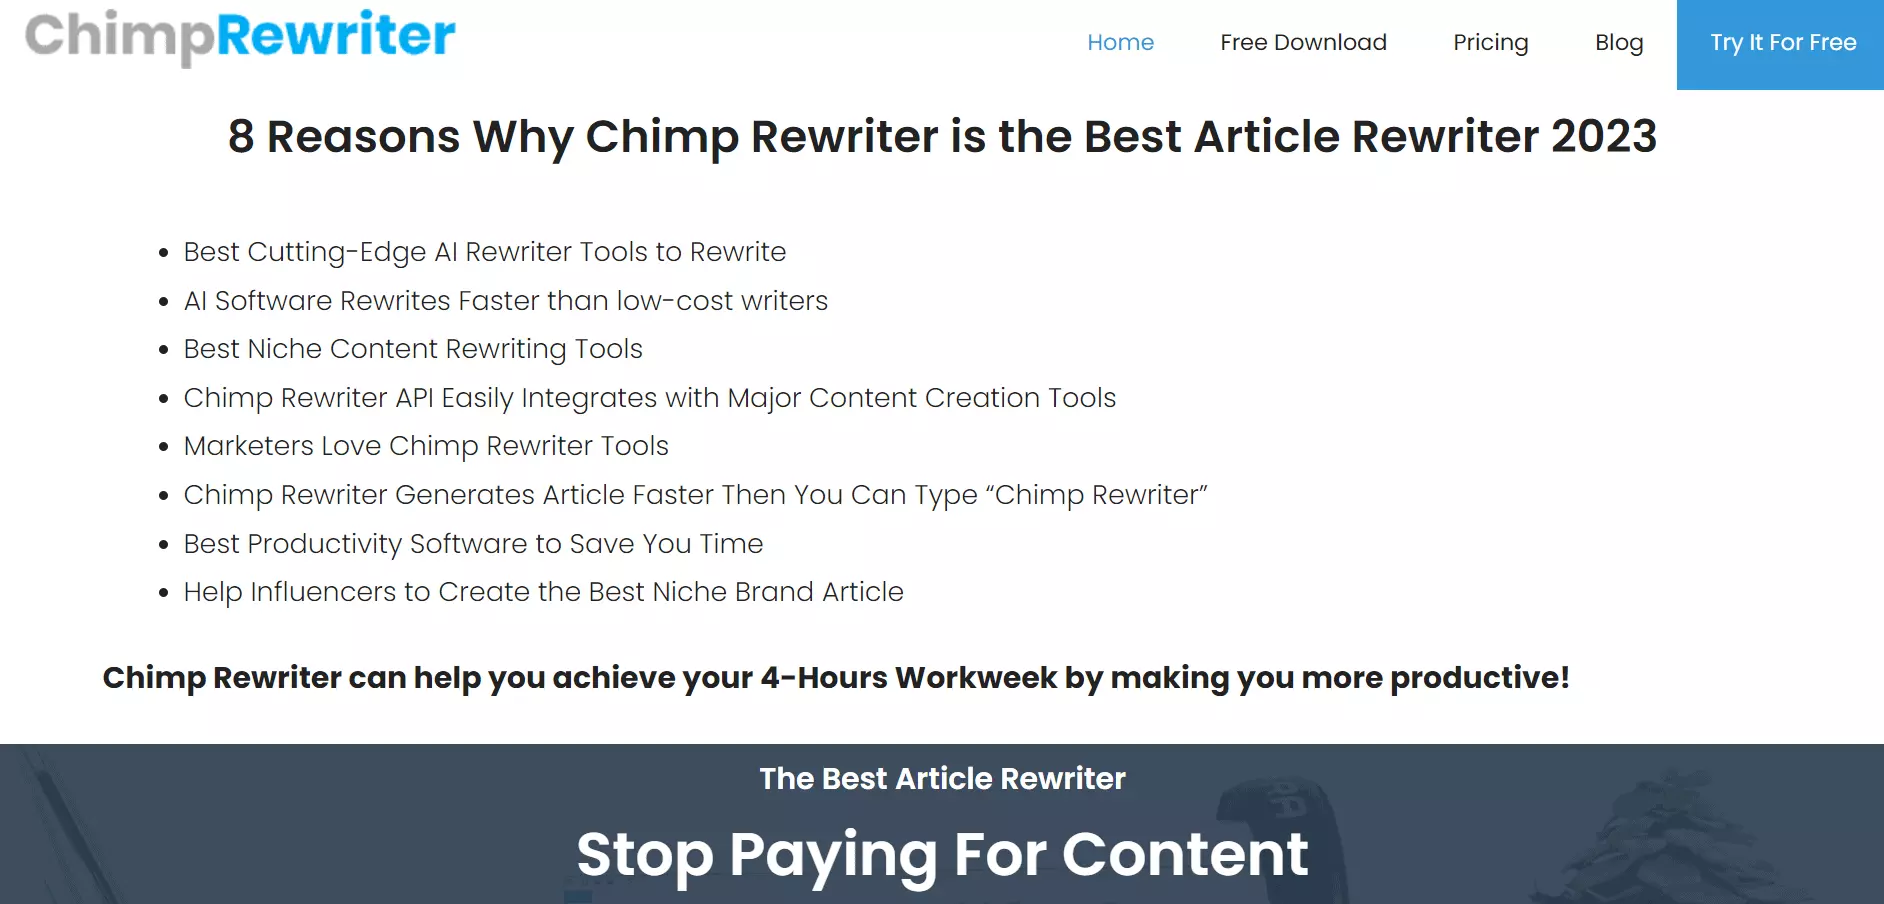 Chimp Rewriter Review